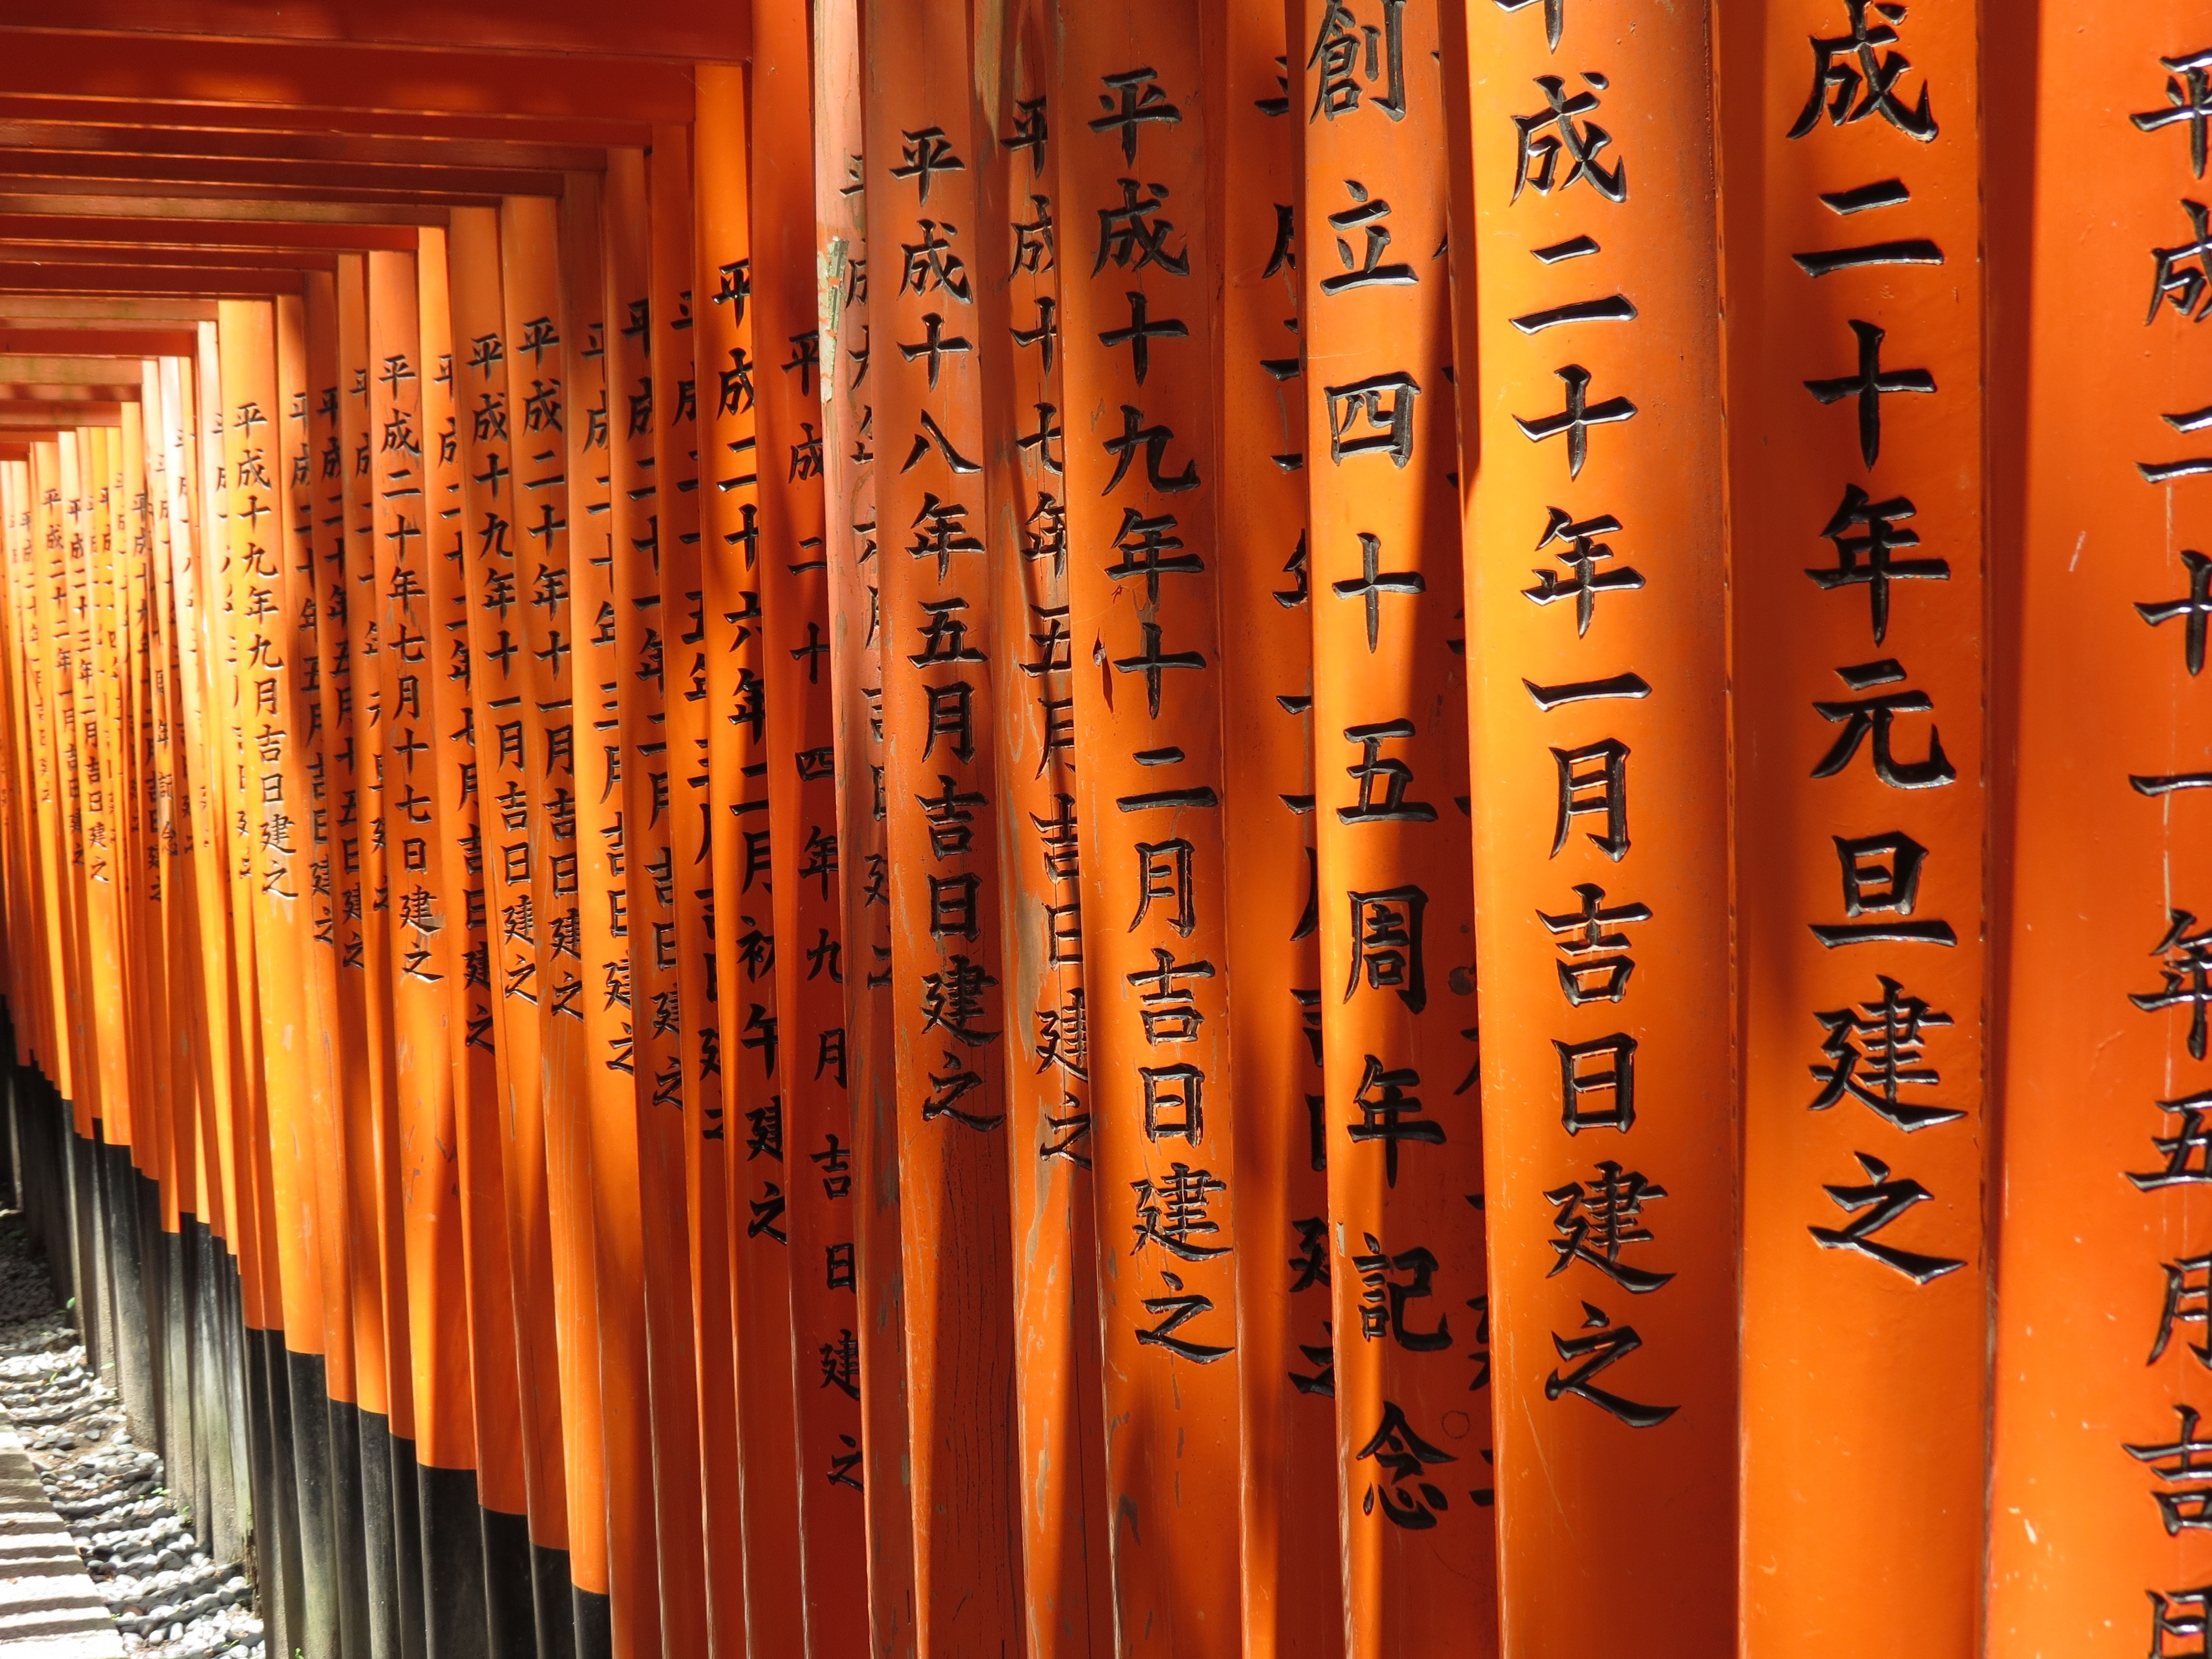 Font Characters, Orange, Gate, Japan, cultures, wood - material